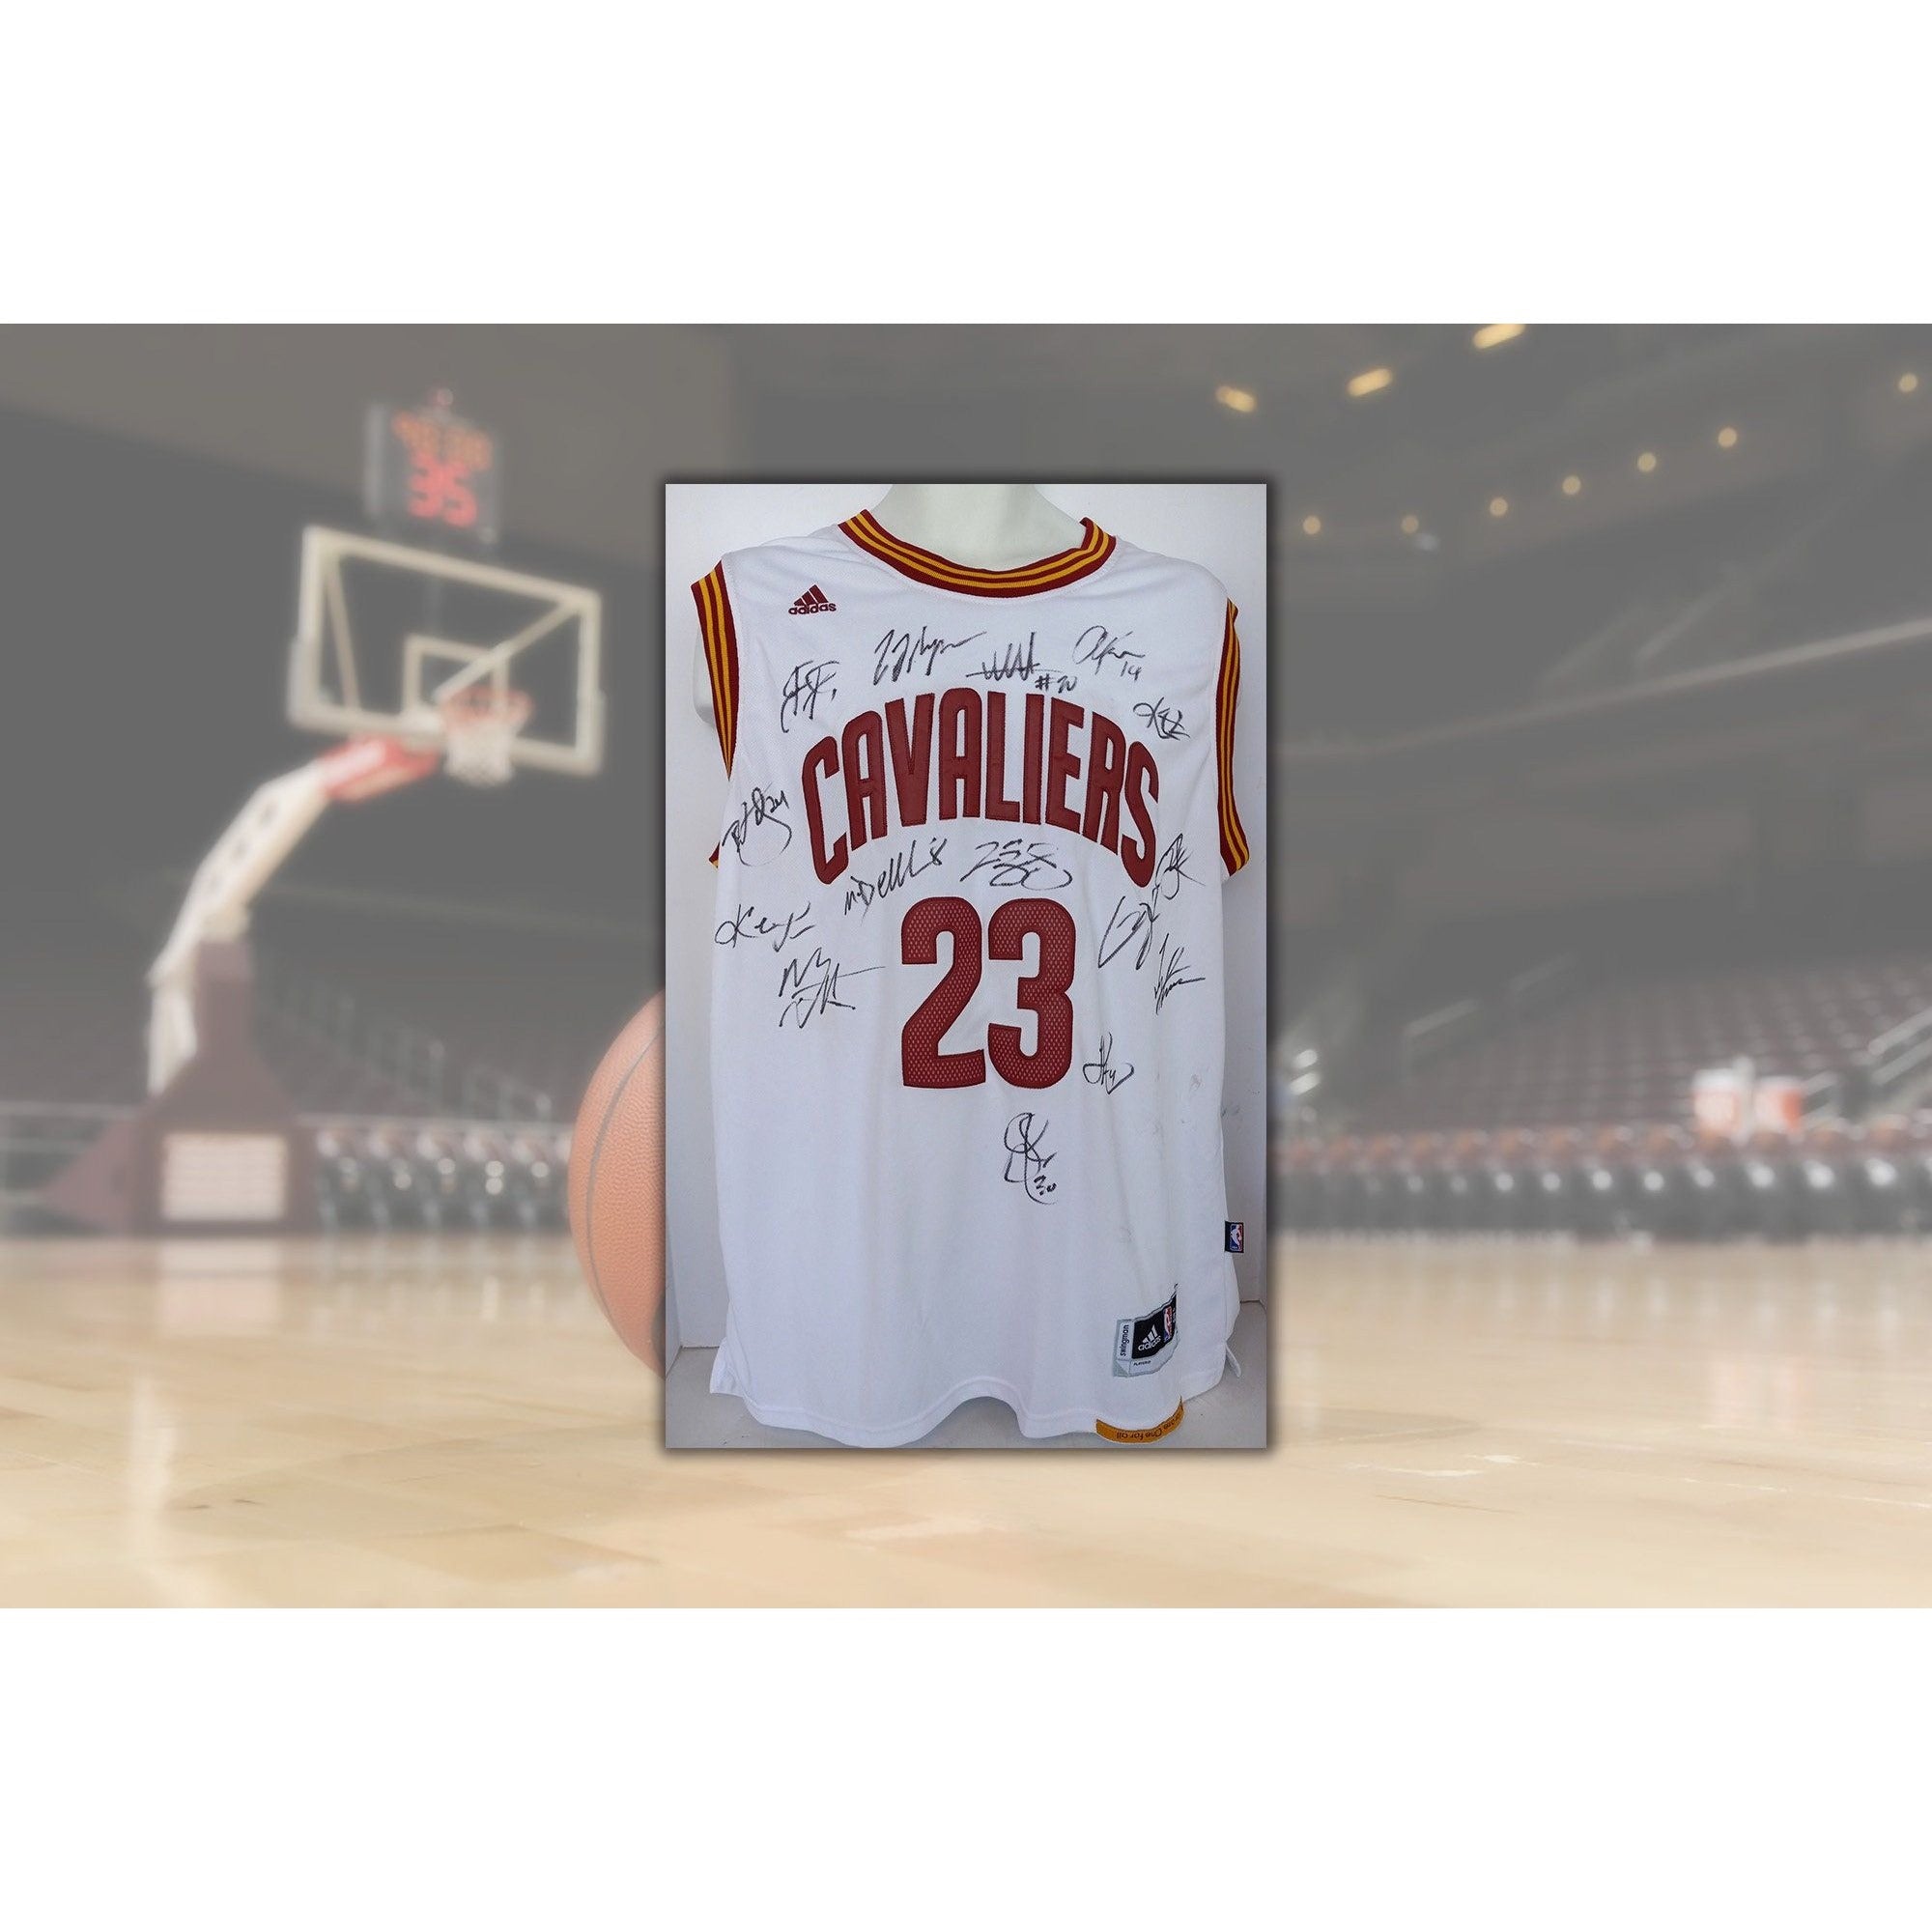 Adidas 2016 NBA Champions Cleveland Cavaliers LeBron James Basketball Jersey